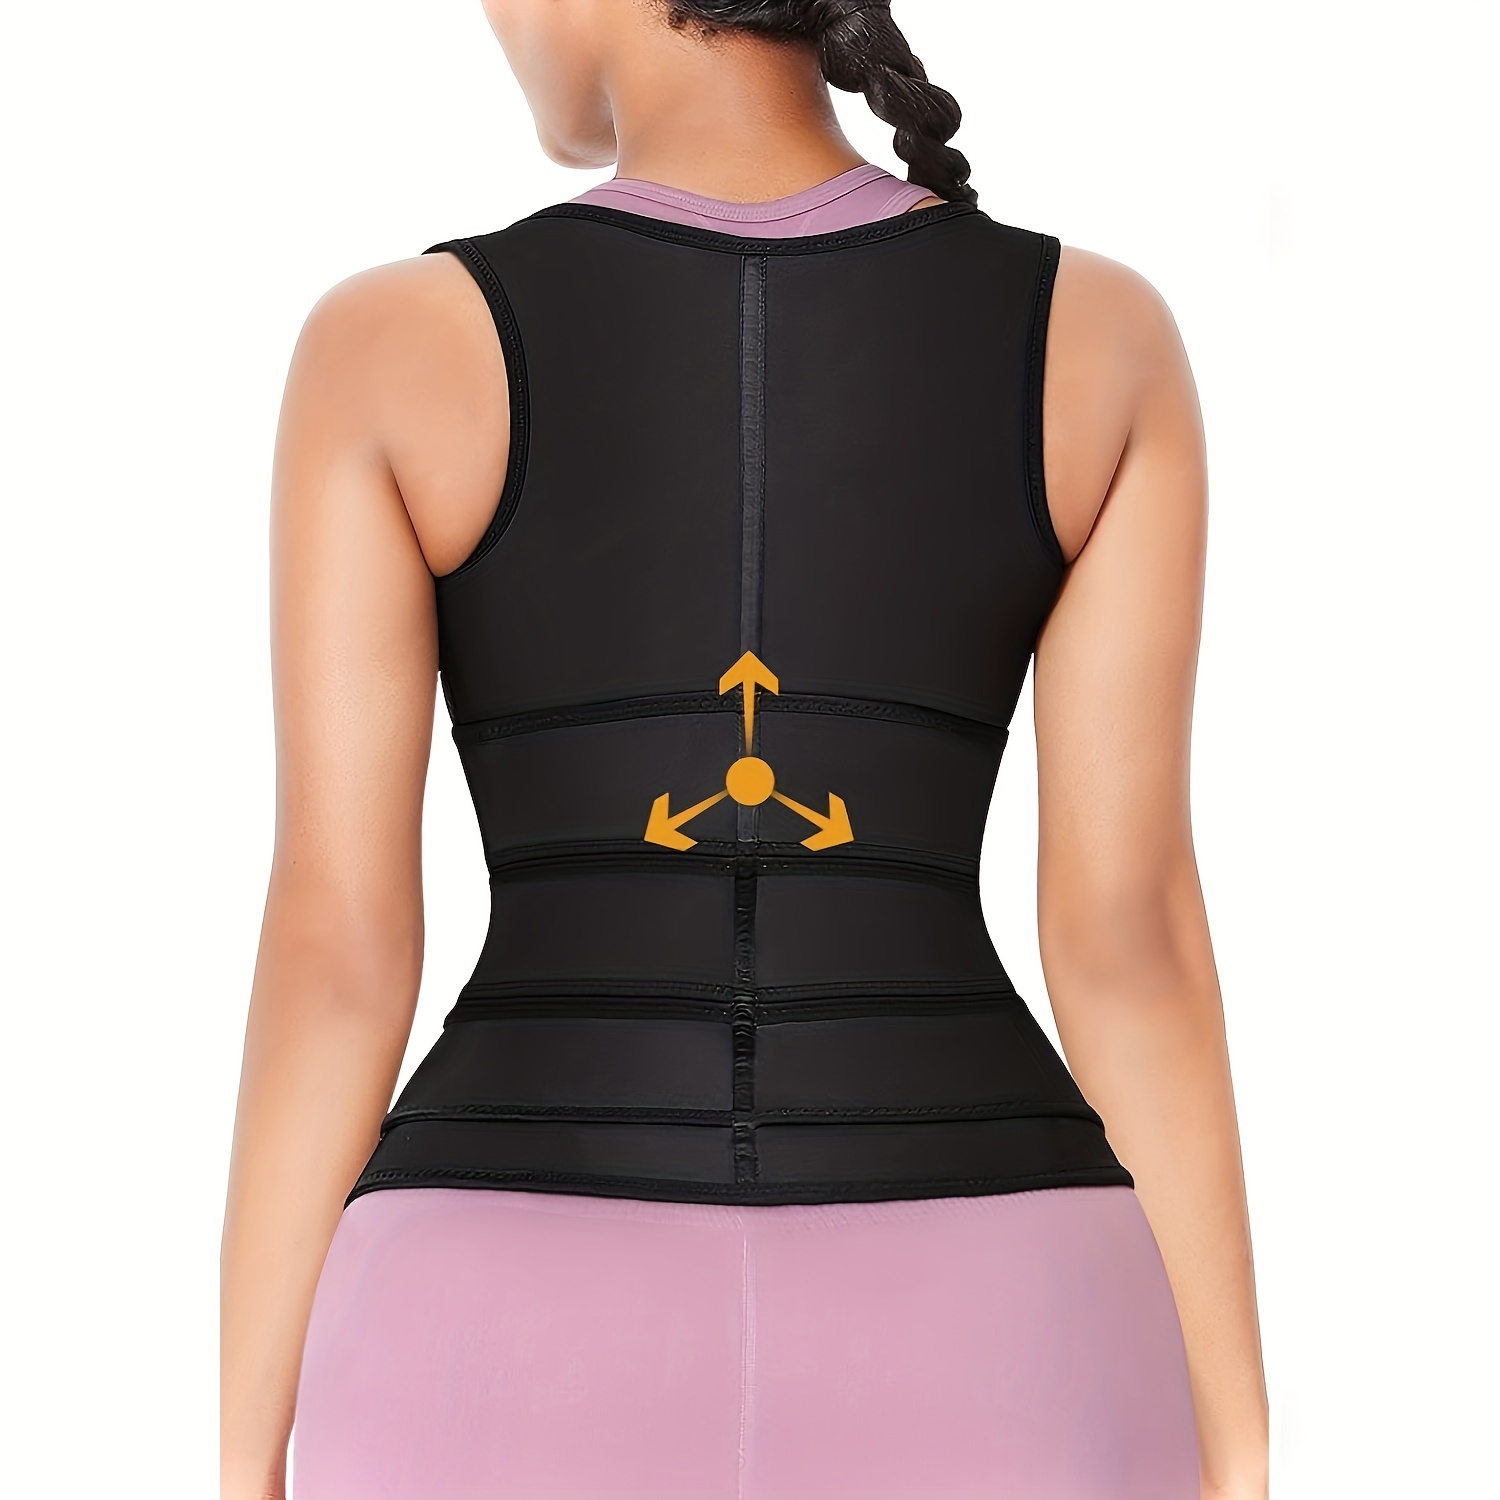 Fashion Women Fitness Corset Sport Body Vest Waist Trainer Workout Slimming  Solid Color Zipper Skinny Lingerie утягивающее белье